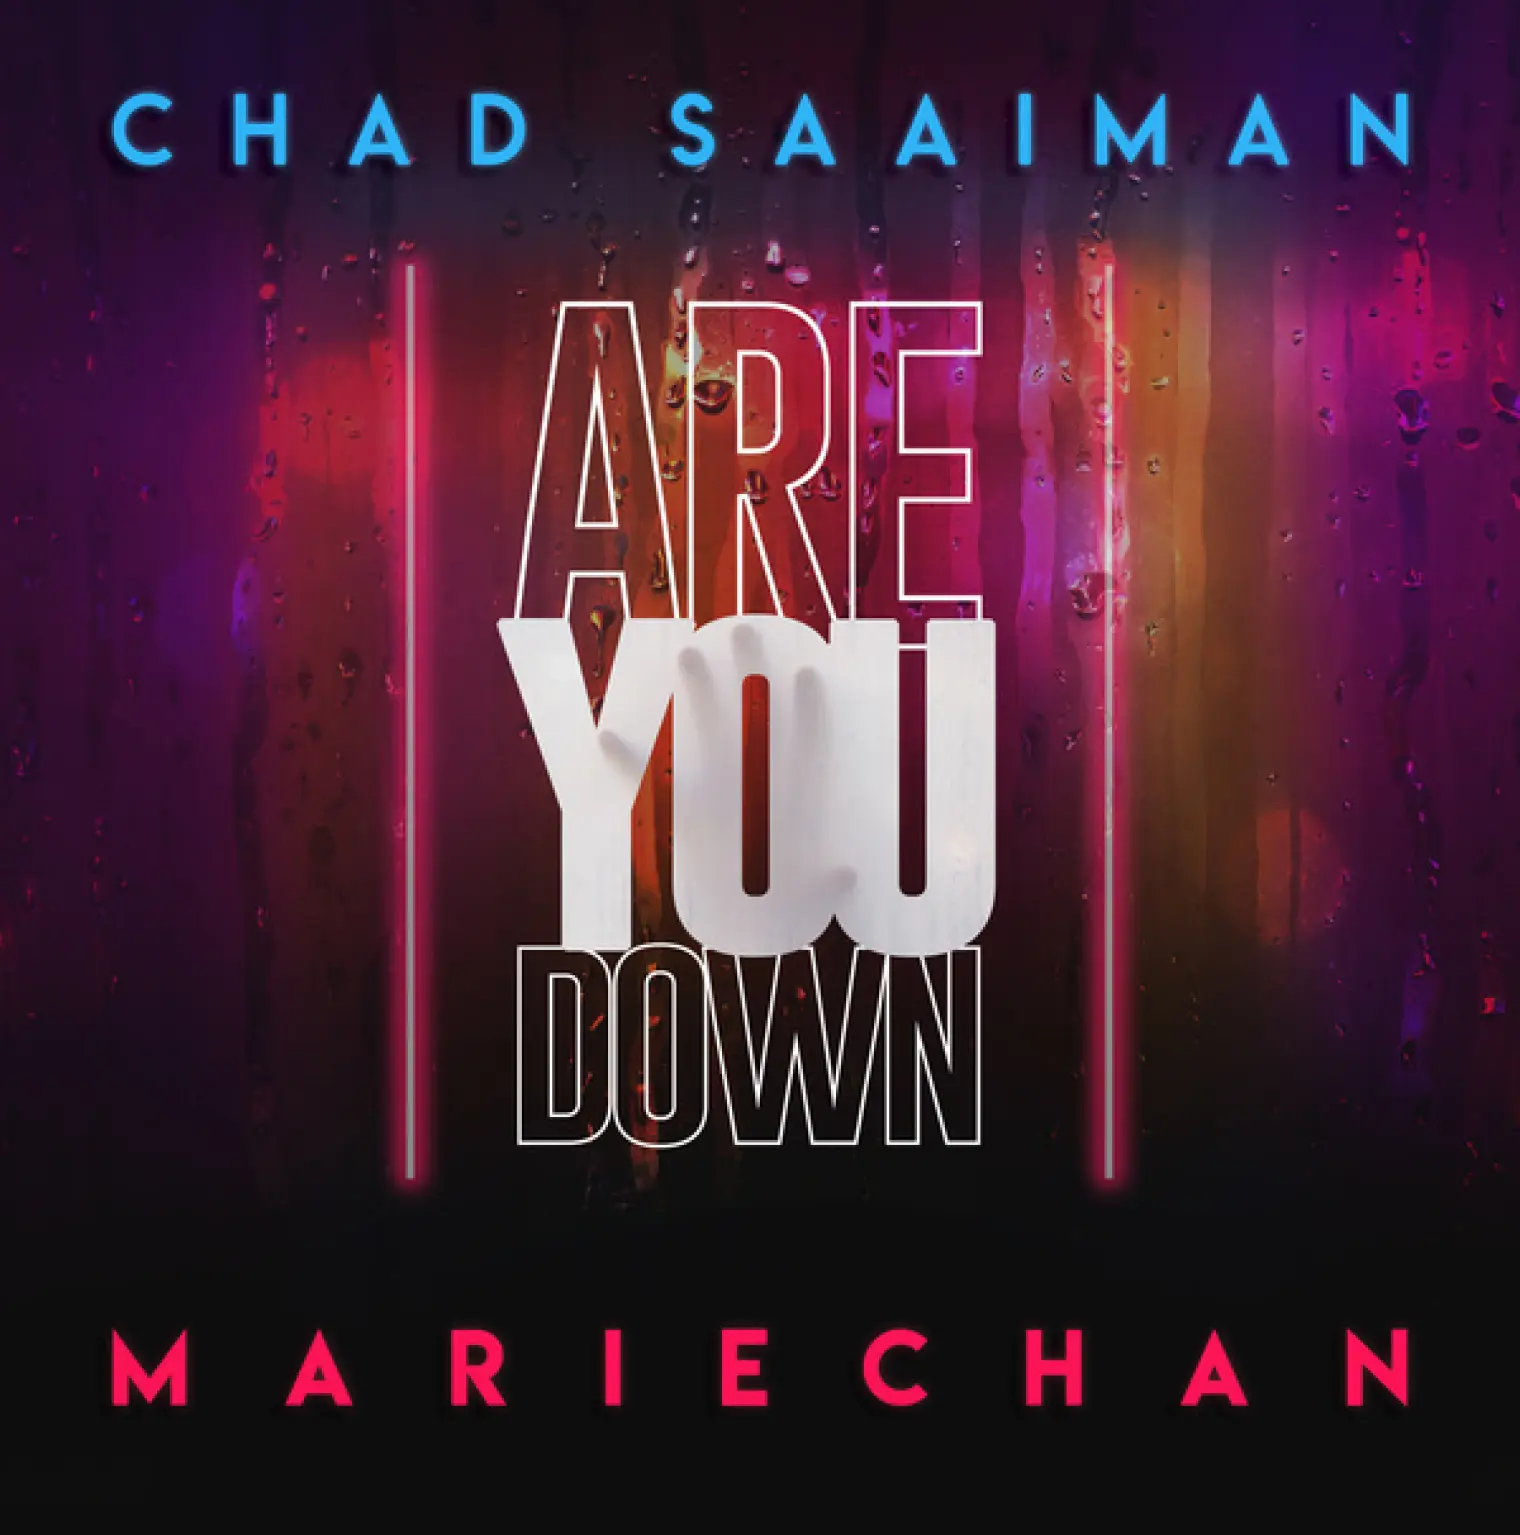 Are You Down (feat. Mariechan) -  Chad Saaiman 